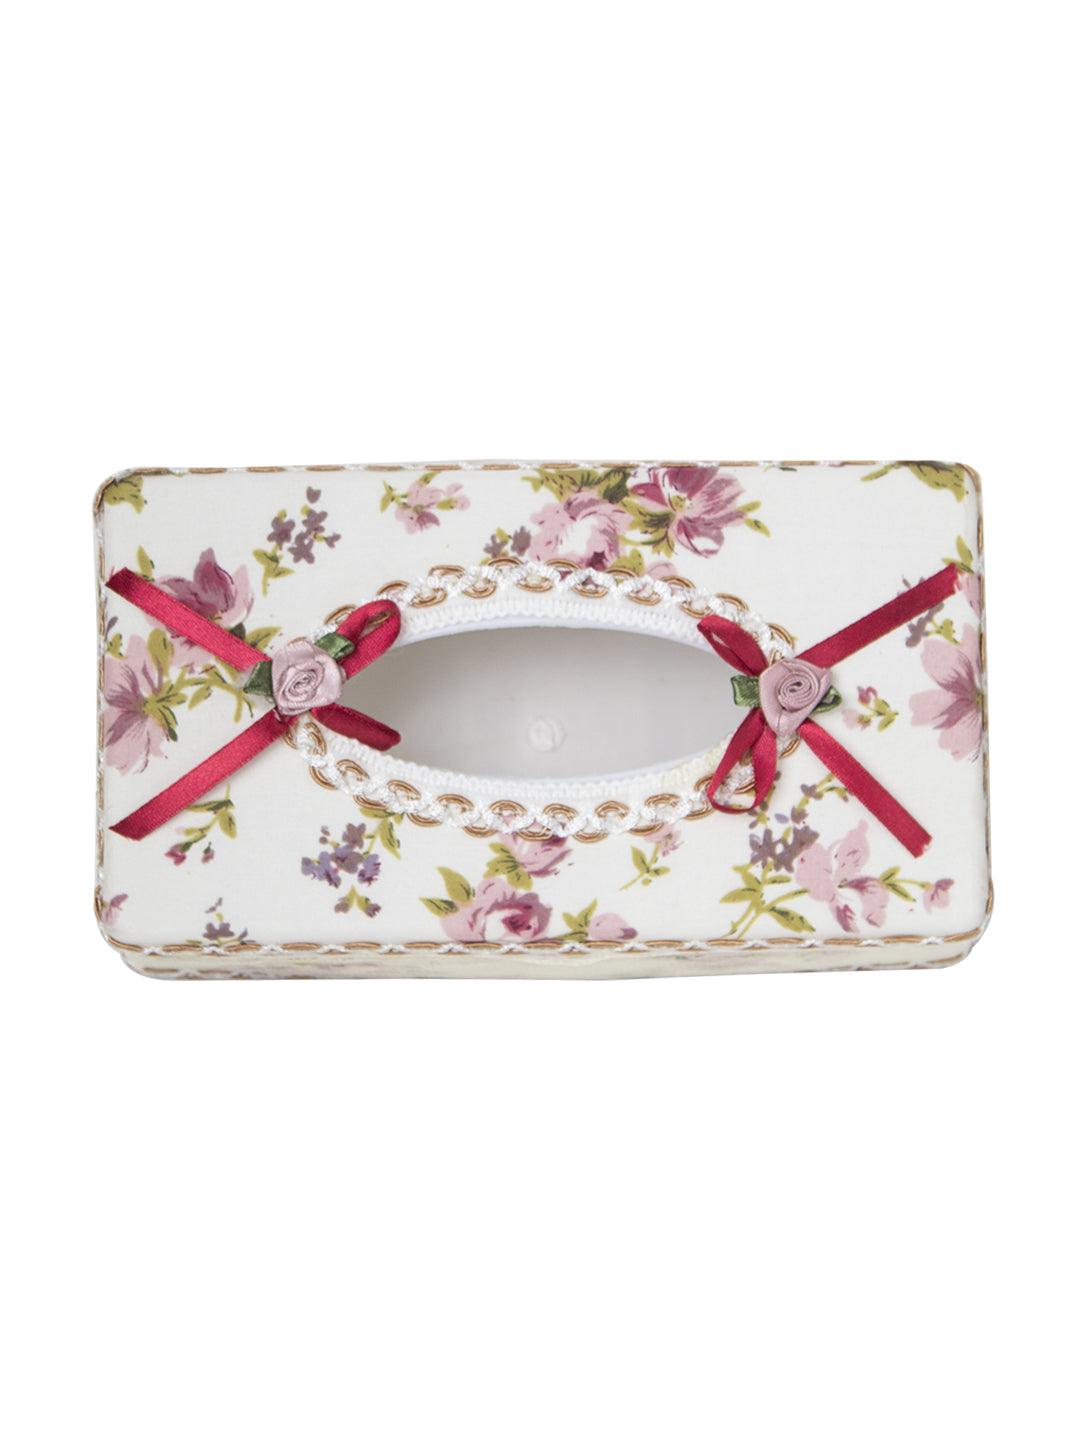 Ivory & Pink Tissue Box - 22.4 X 12.4 X 8.3Cm - MARKET 99